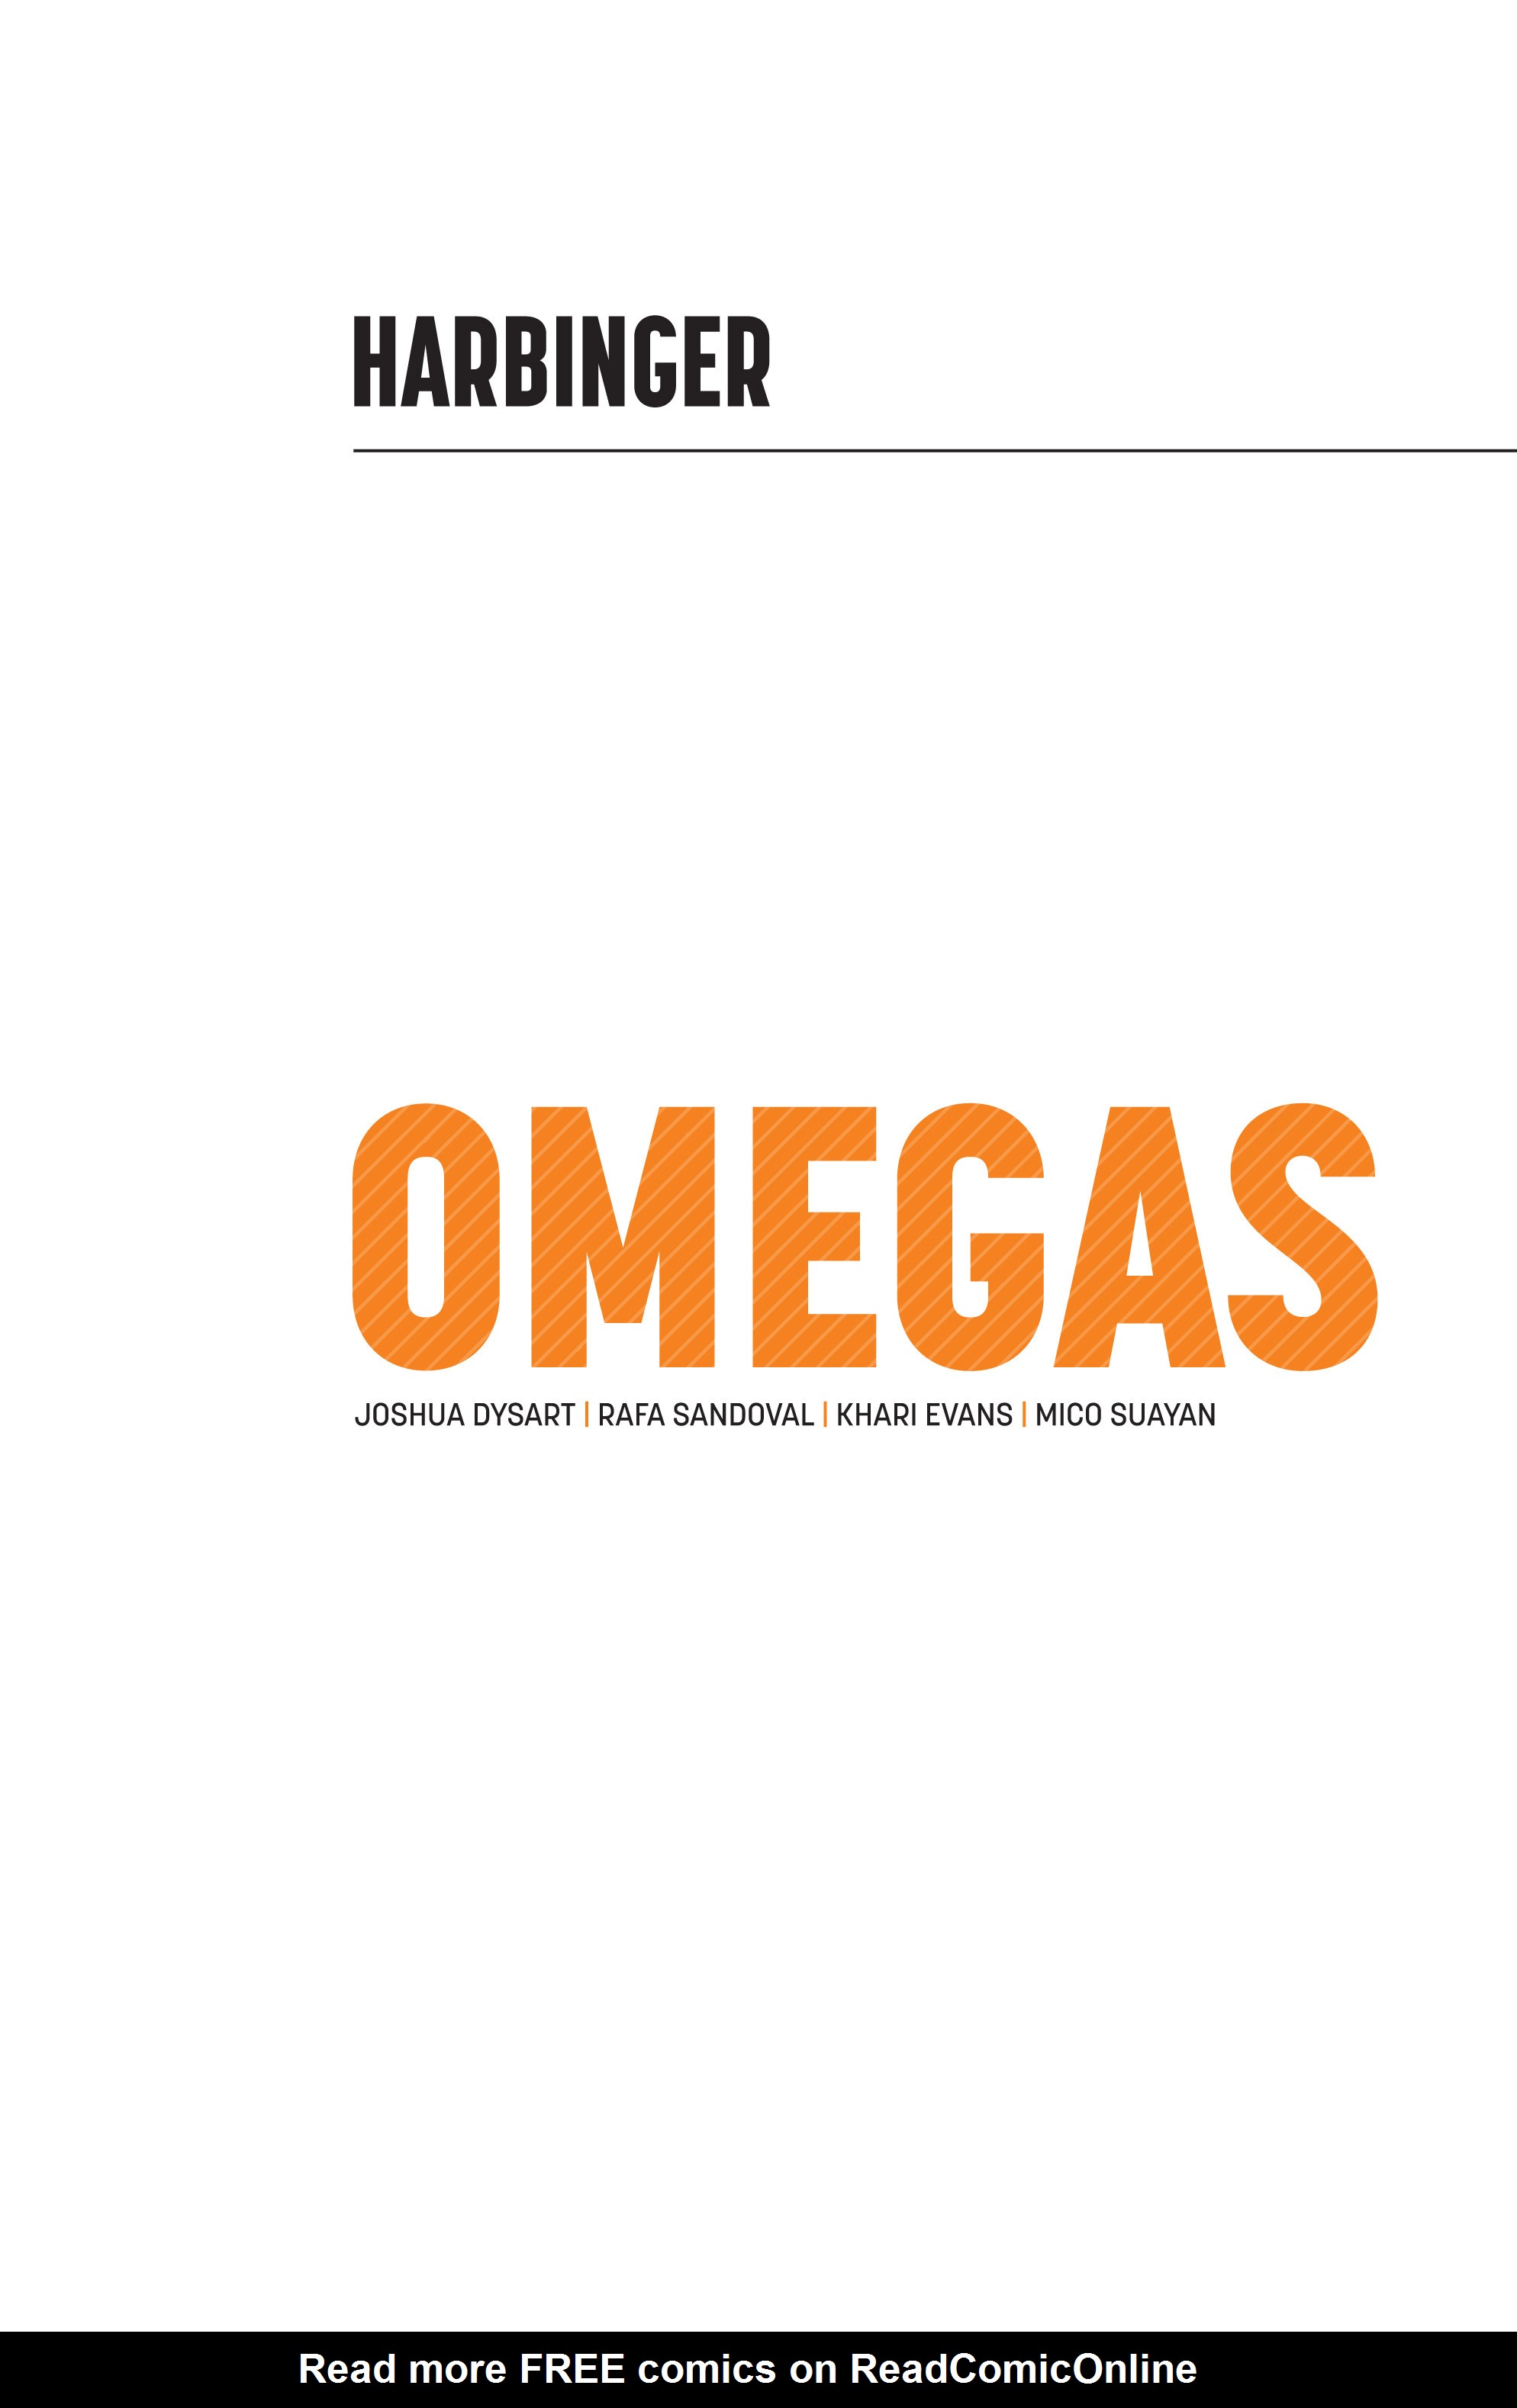 Read online Harbinger: Omegas comic -  Issue # TPB - 2